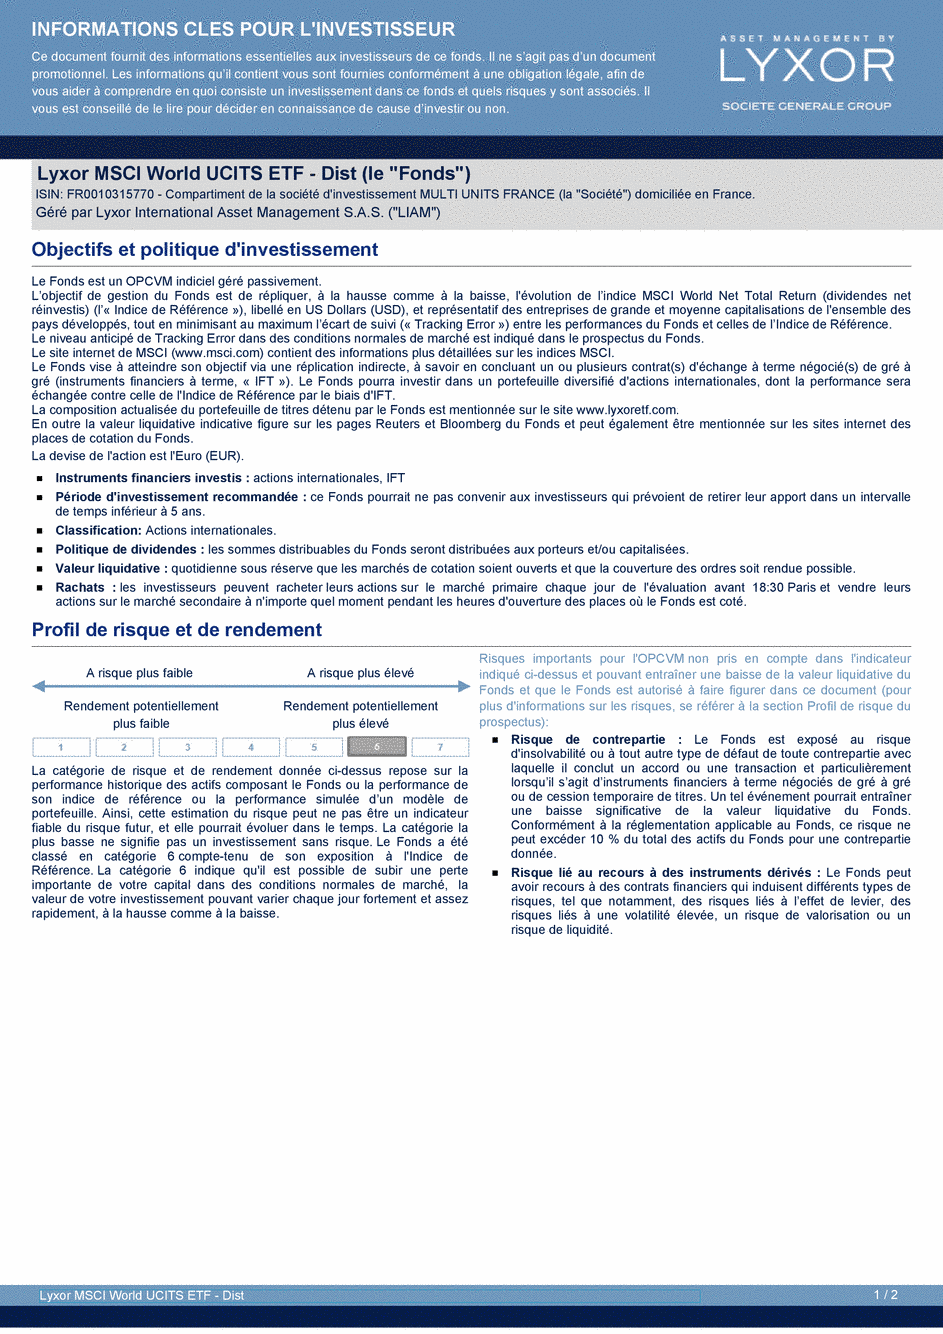 DICI Lyxor MSCI World UCITS ETF - Dist - 19/02/2021 - Français